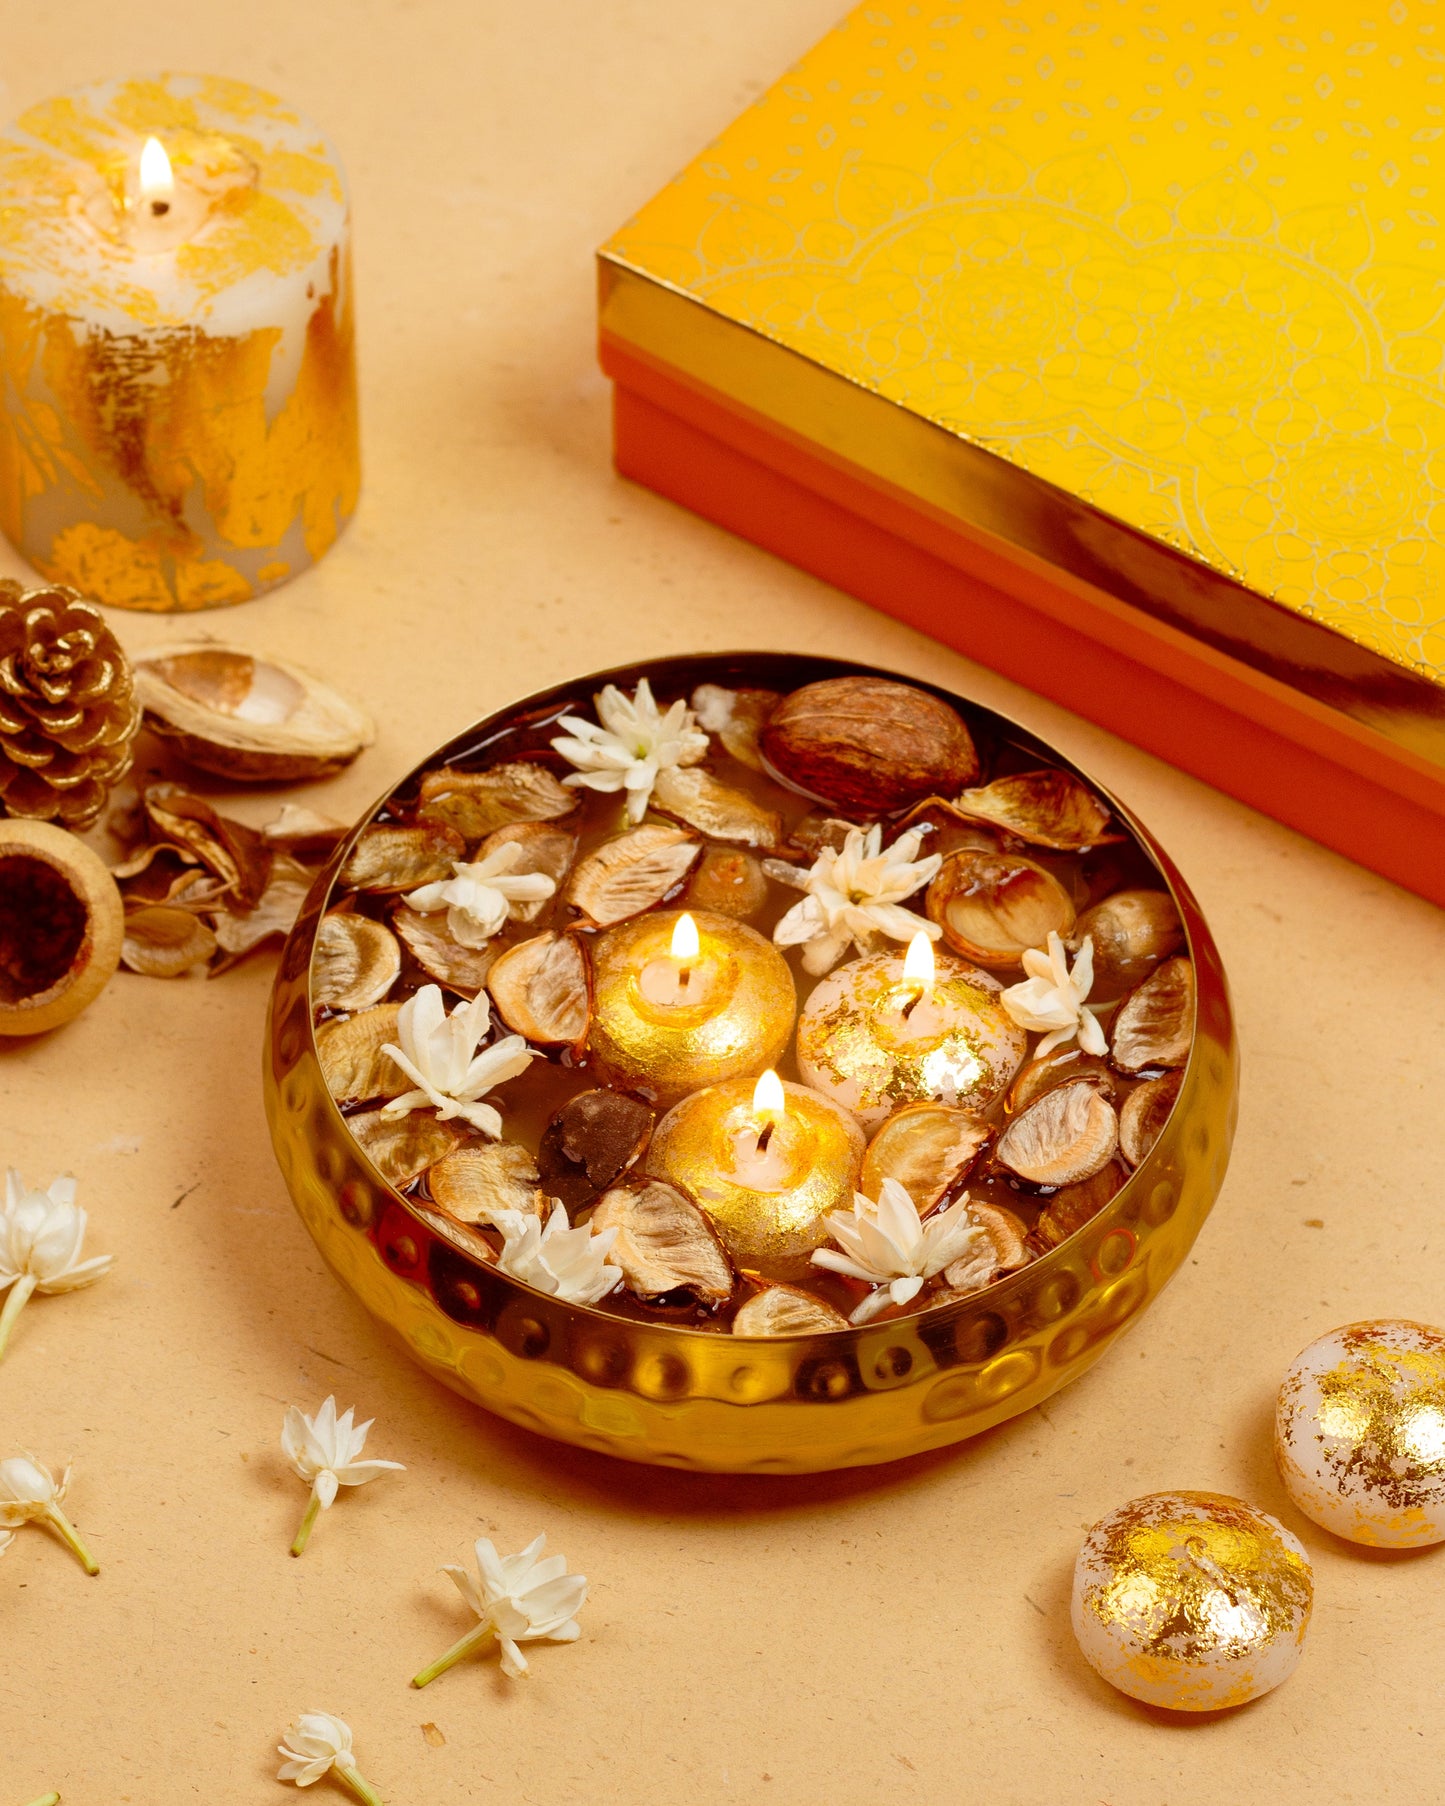 Bulk Buy AuraDecor Urli Gift Set with Floating Candles & Potpourri in a Gift Box ( MOQ 16 Pcs )